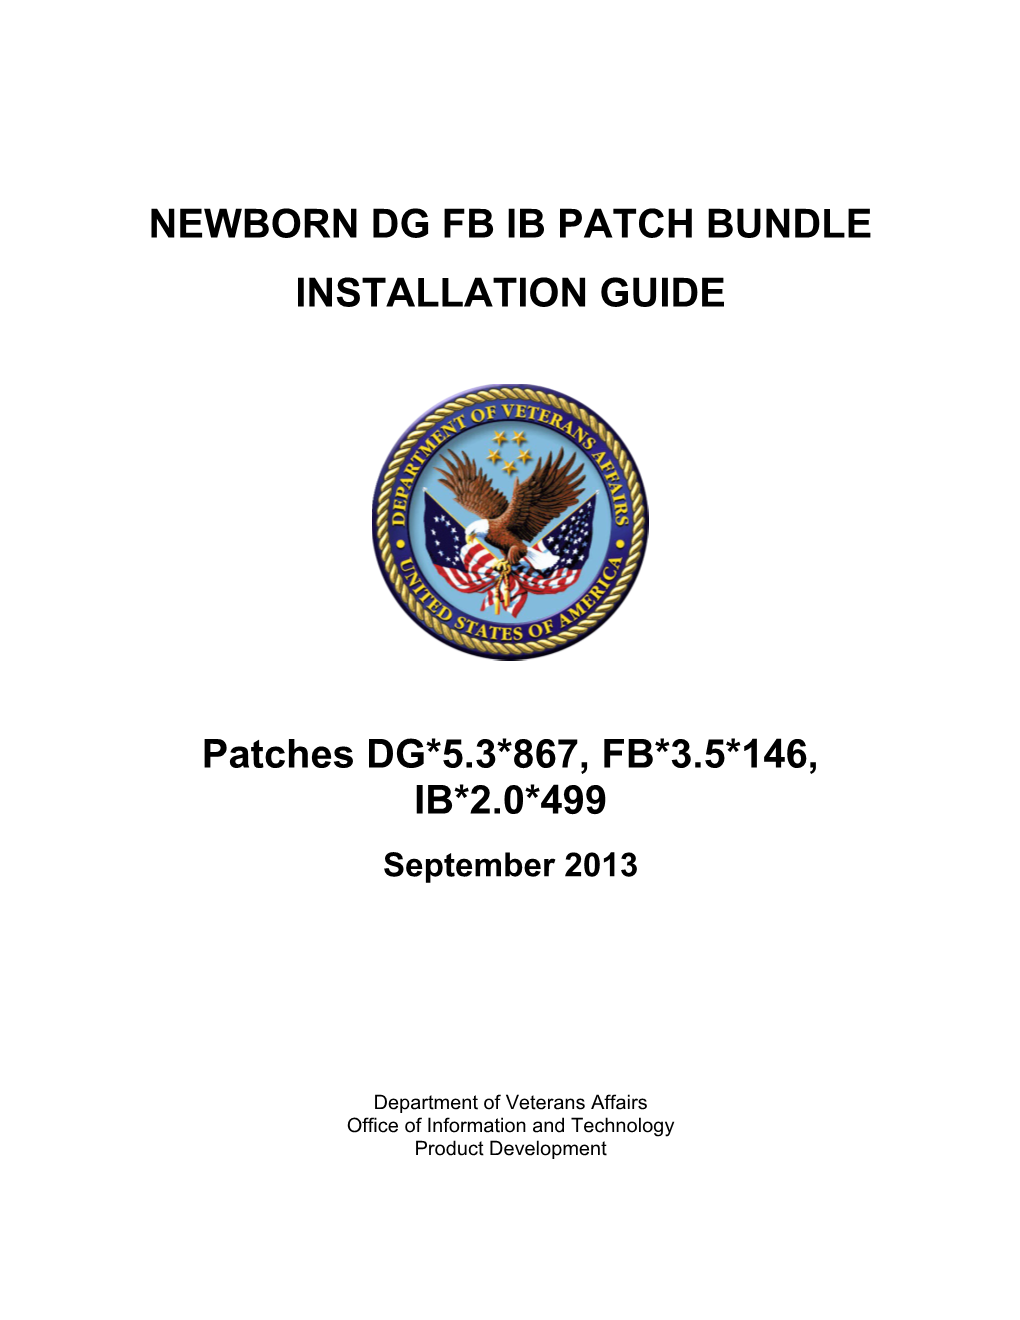 CGNB 1.0 Installation Guide